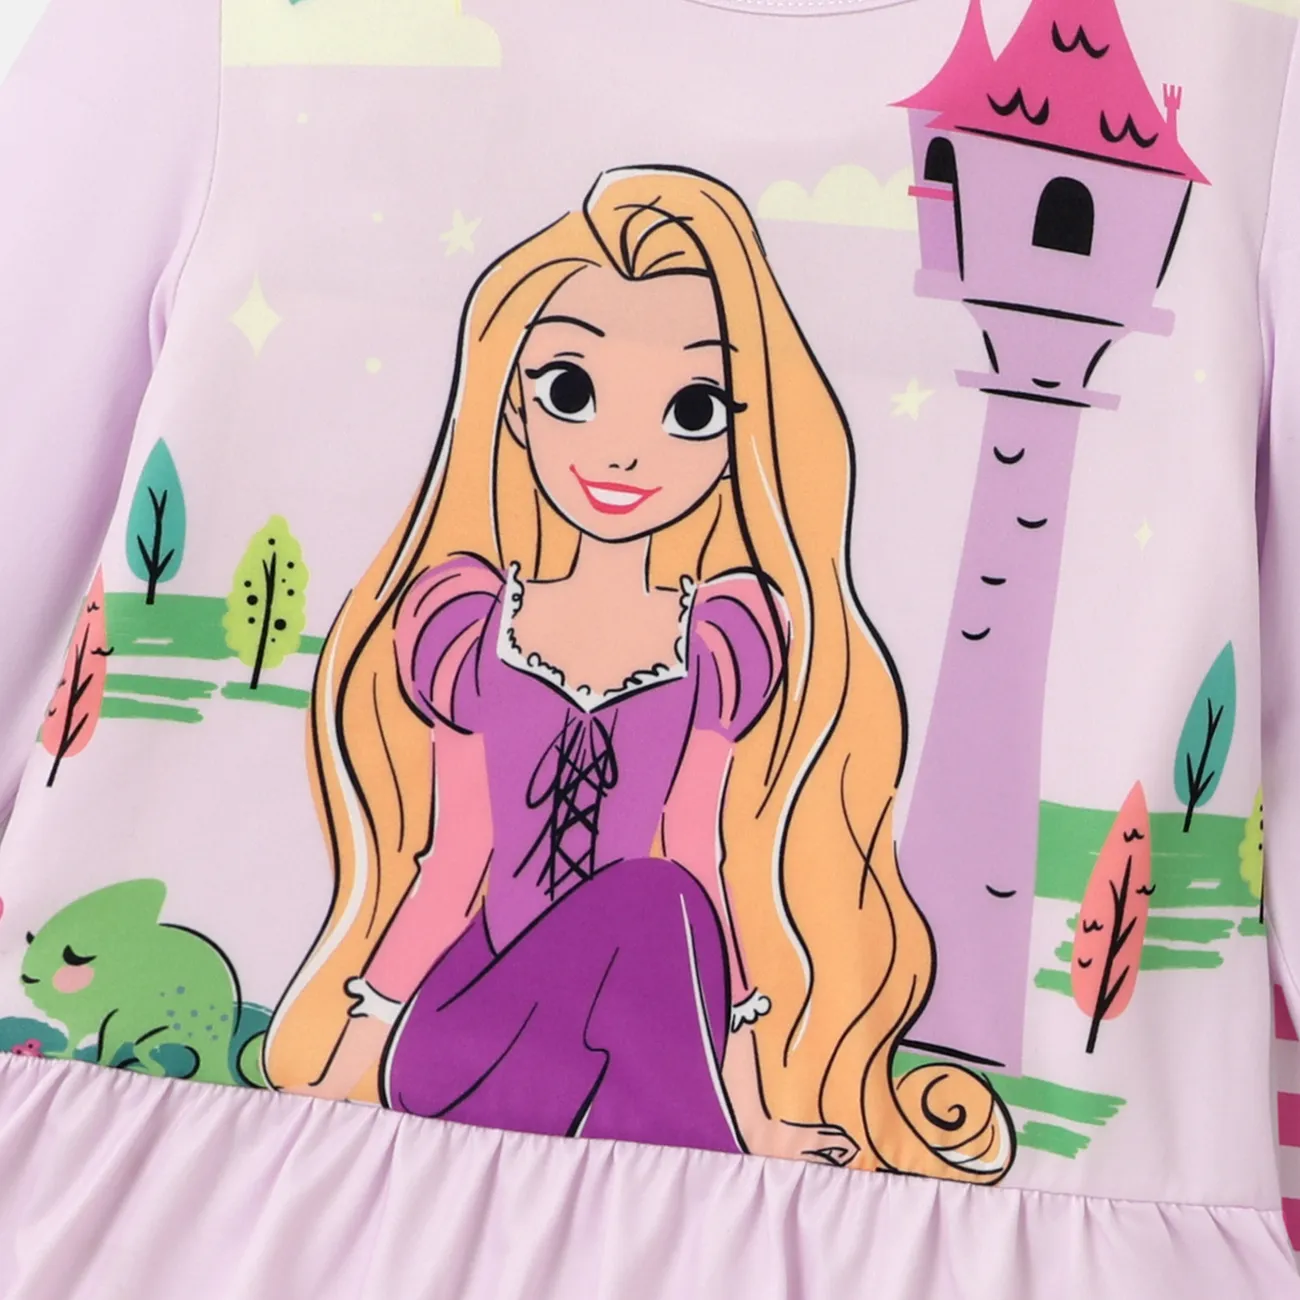 Disney Princess 2 unidades Niño pequeño Chica Volantes Infantil conjuntos de camiseta Violeta claro big image 1